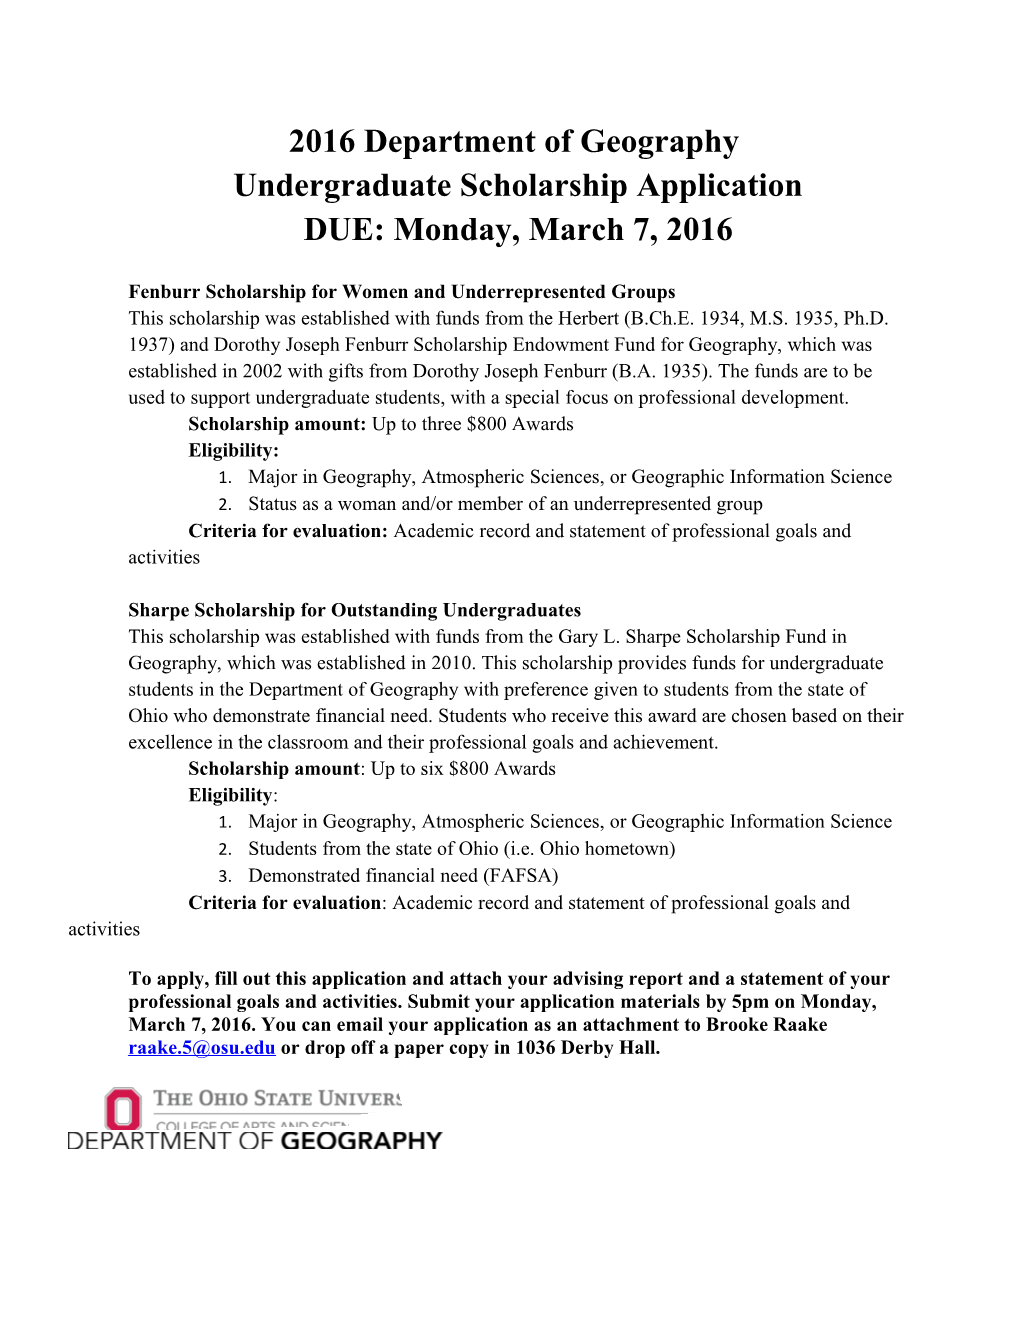 Fenburr Scholarship for Women and Underrepresented Groups